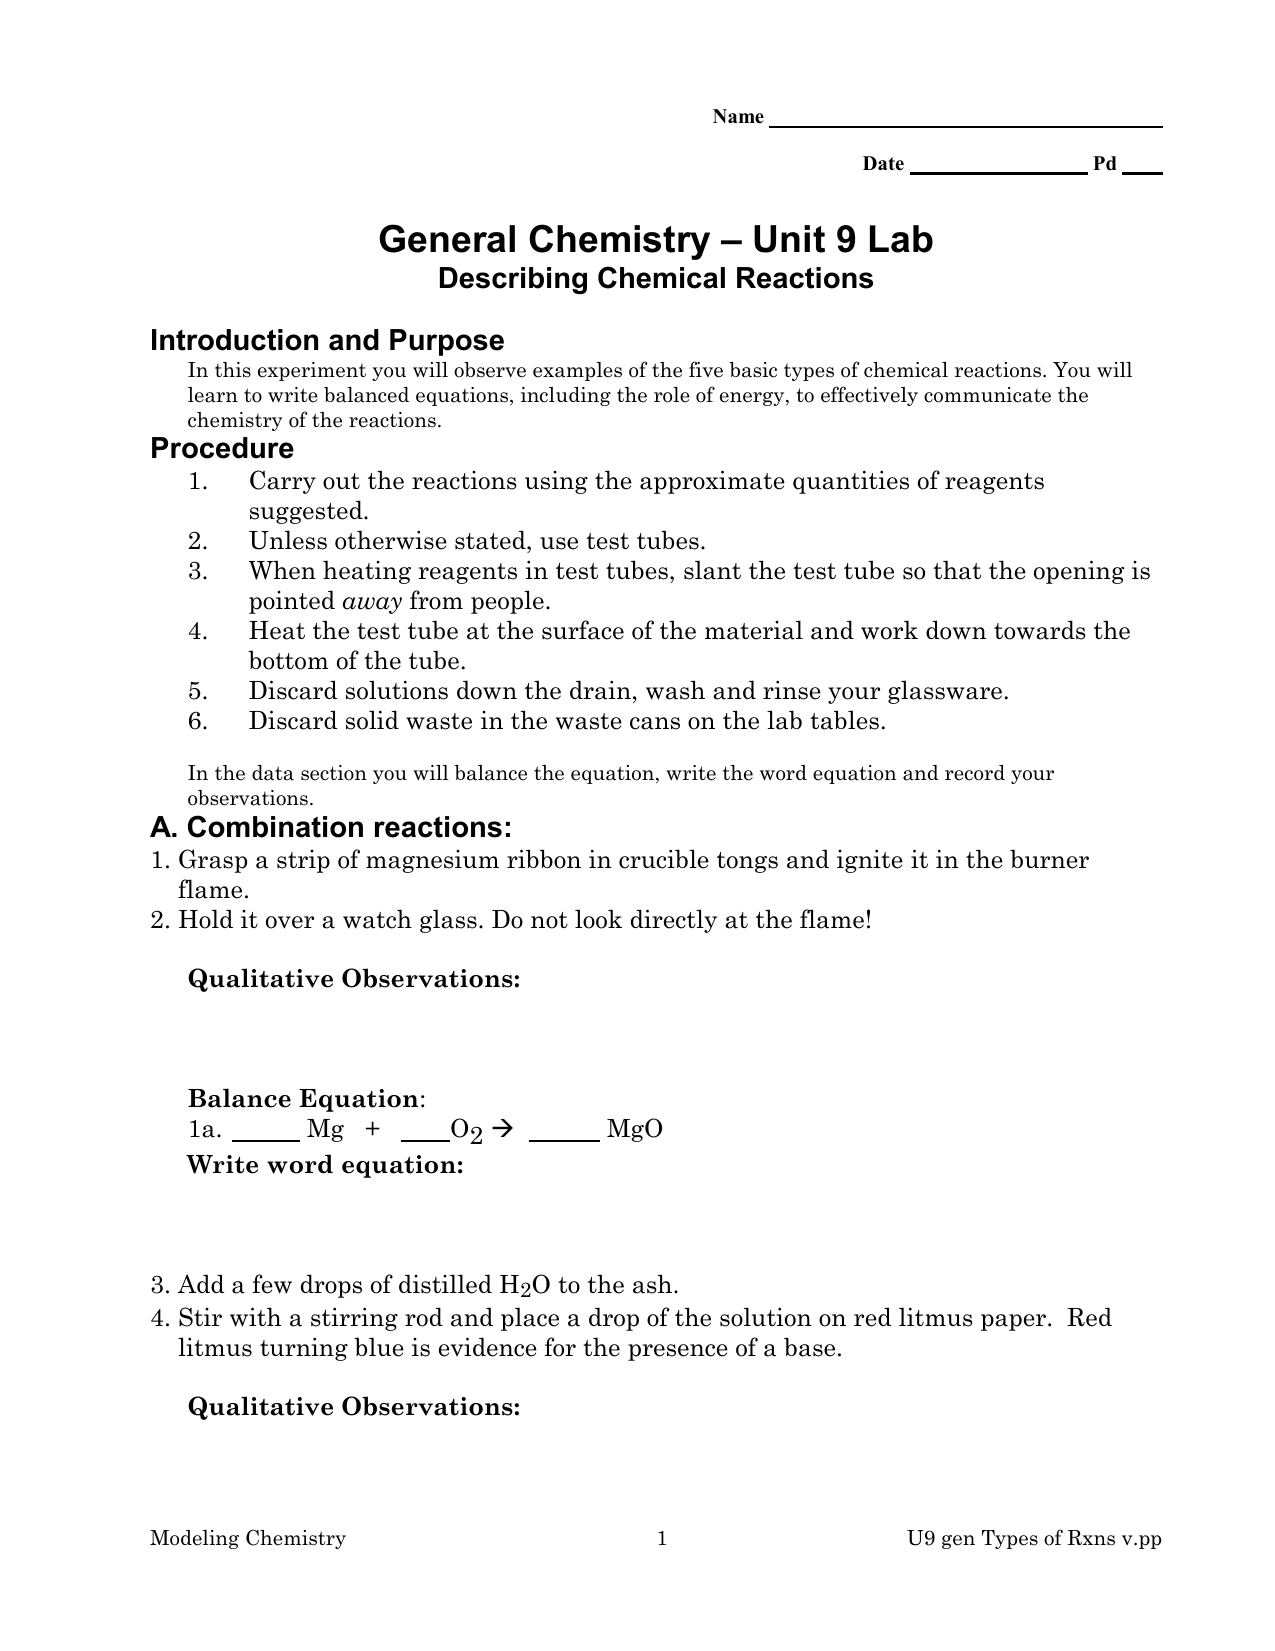 describing-chemical-reactions-lab-answer-key-camron-has-castaneda